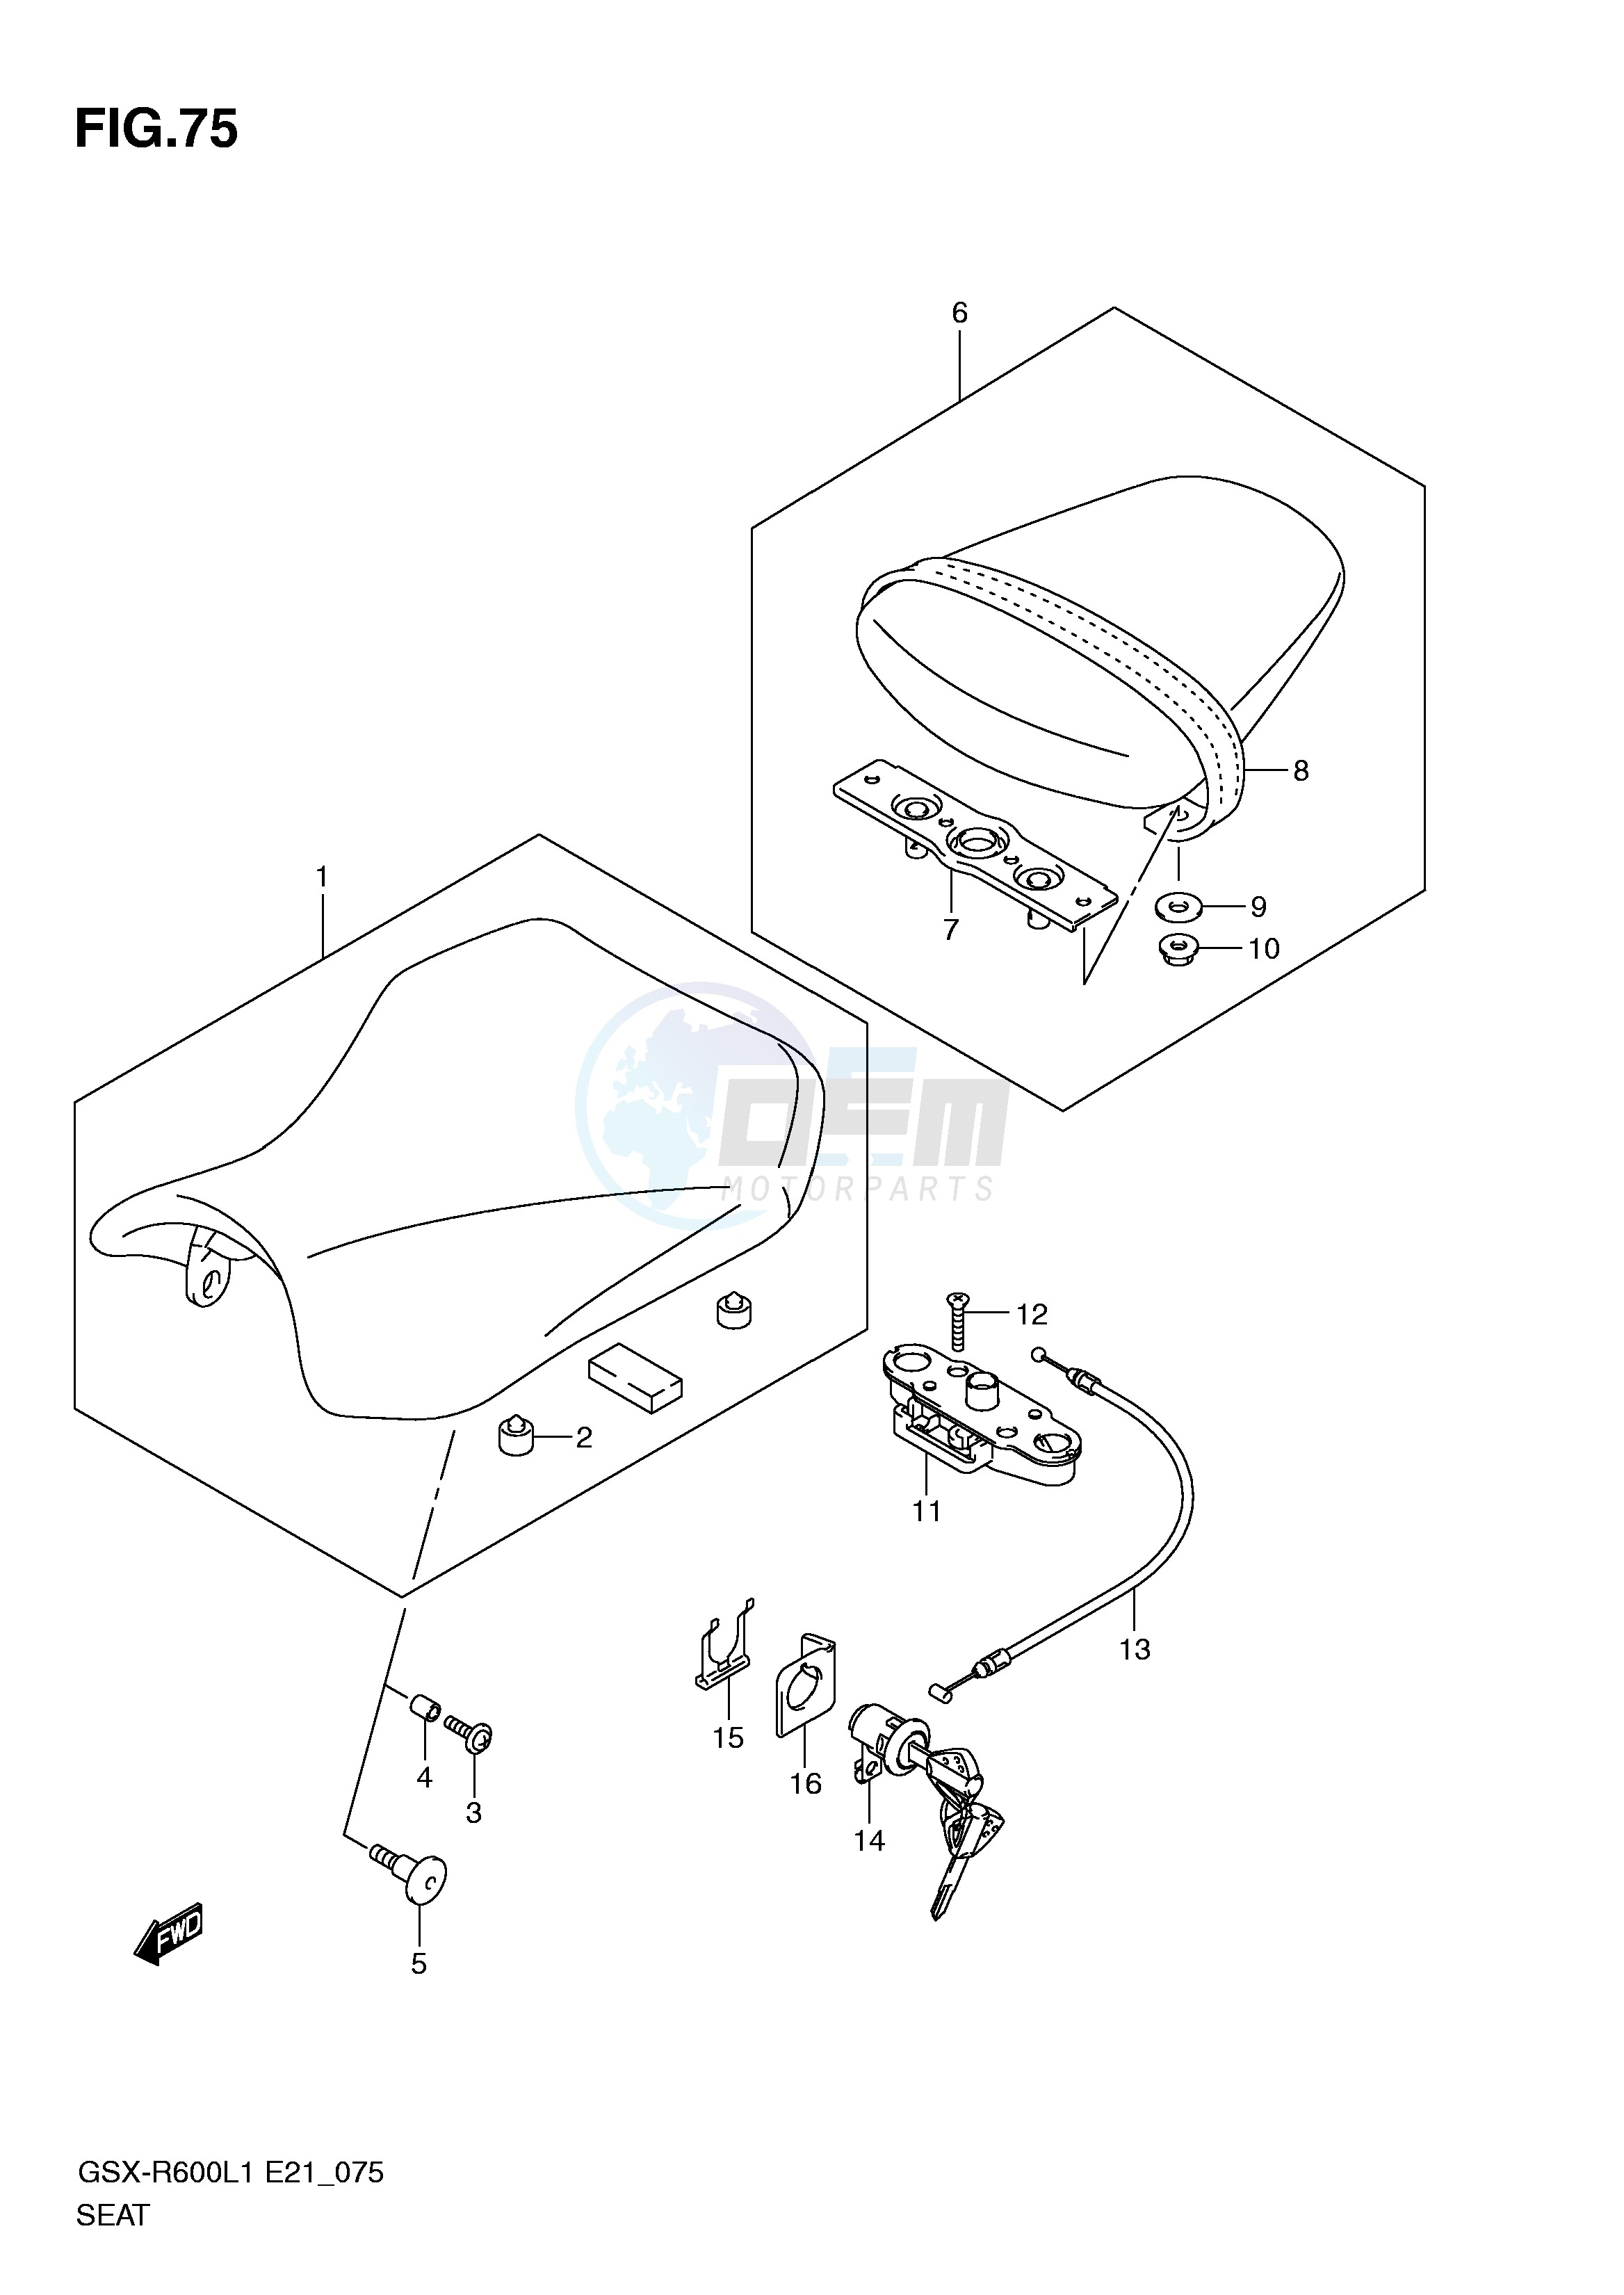 SEAT (GSX-R600L1 E21) blueprint